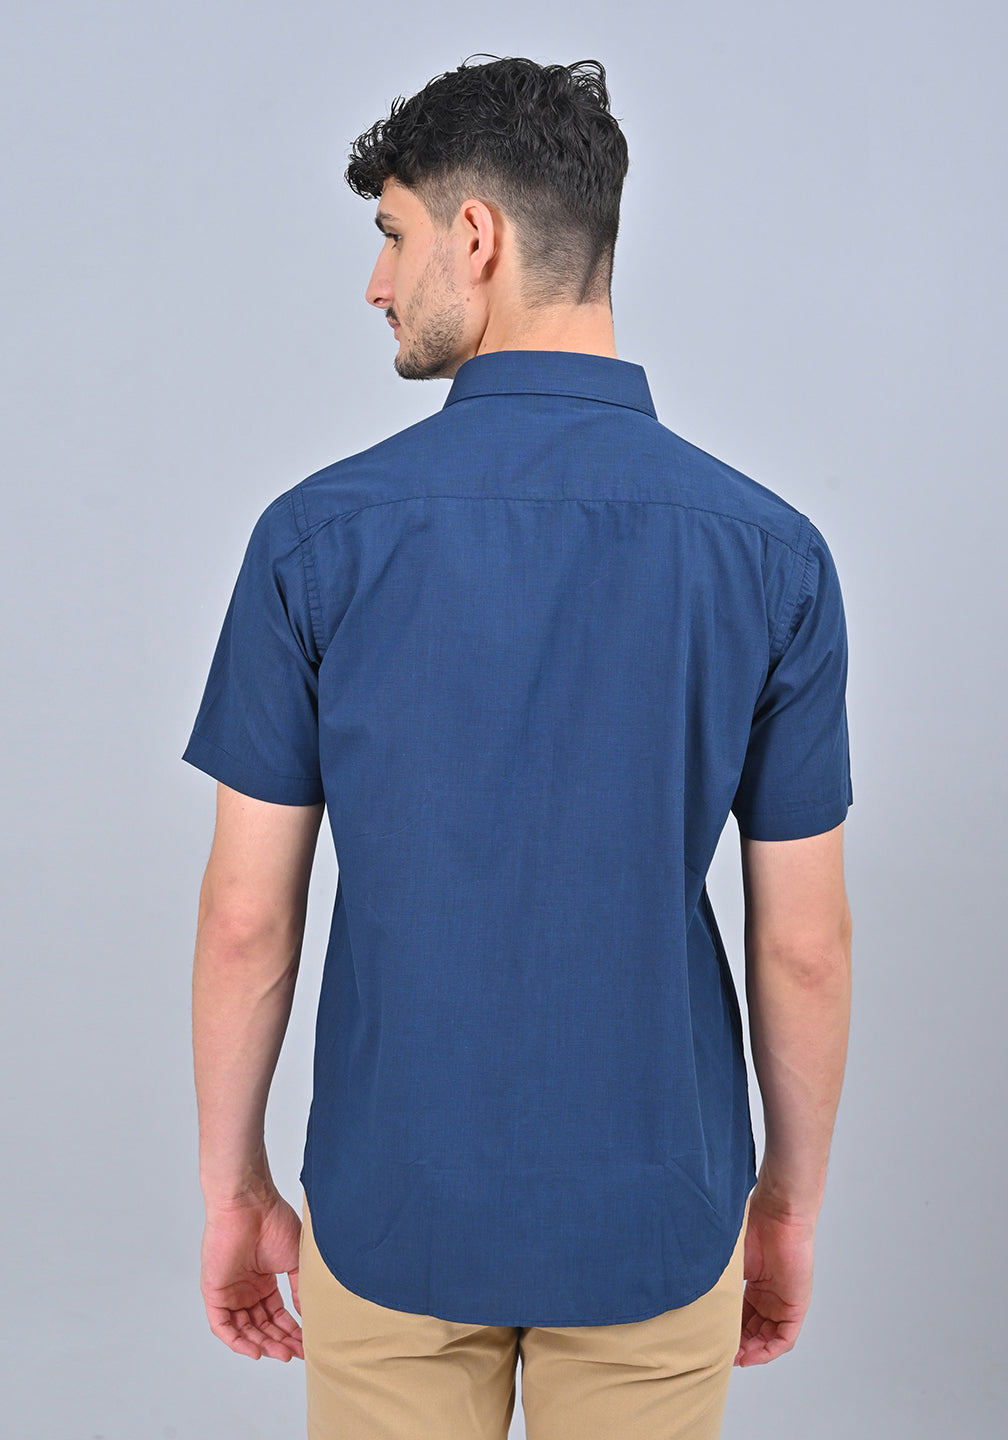 Navy Blue Colour Solid Formal Half Sleeve Shirt